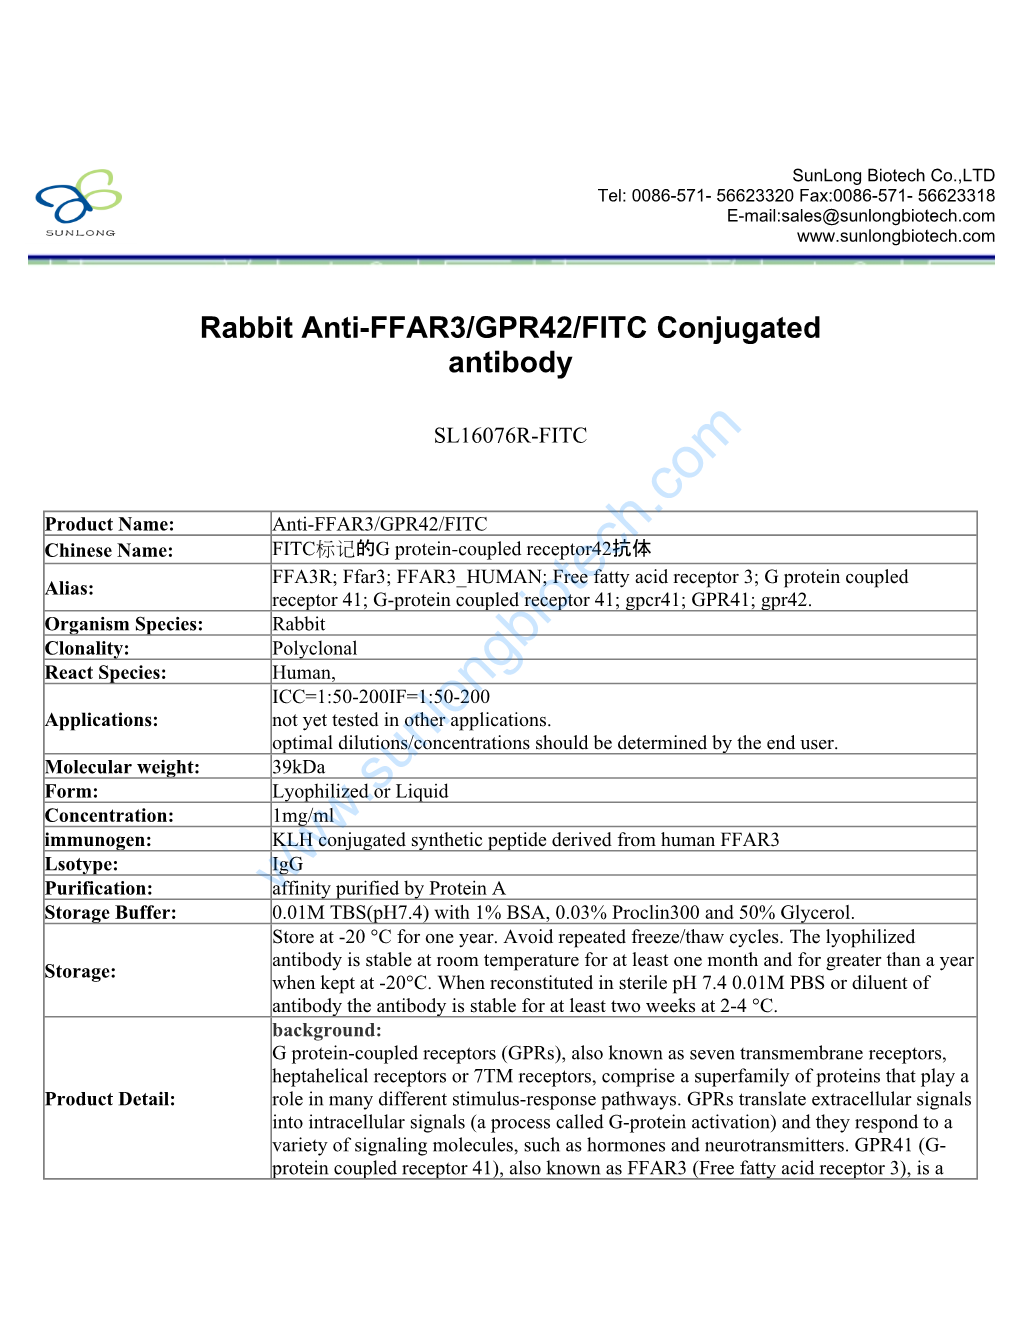 Rabbit Anti-FFAR3/GPR42/FITC Conjugated Antibody-SL16076R